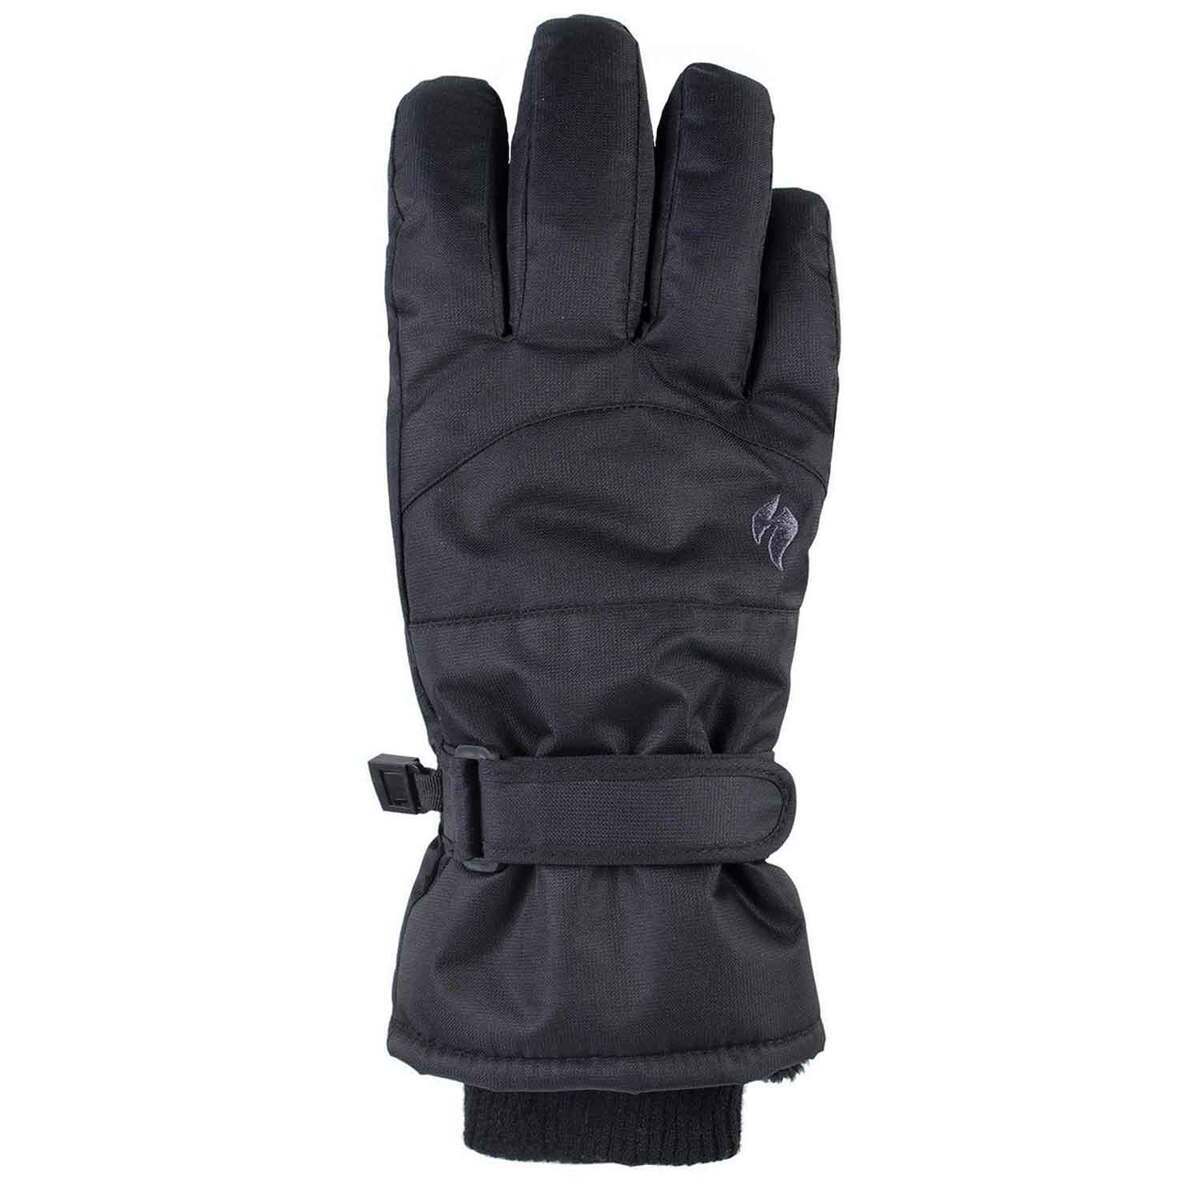 Heat Holders Men's Performance Gloves - Black L/XL